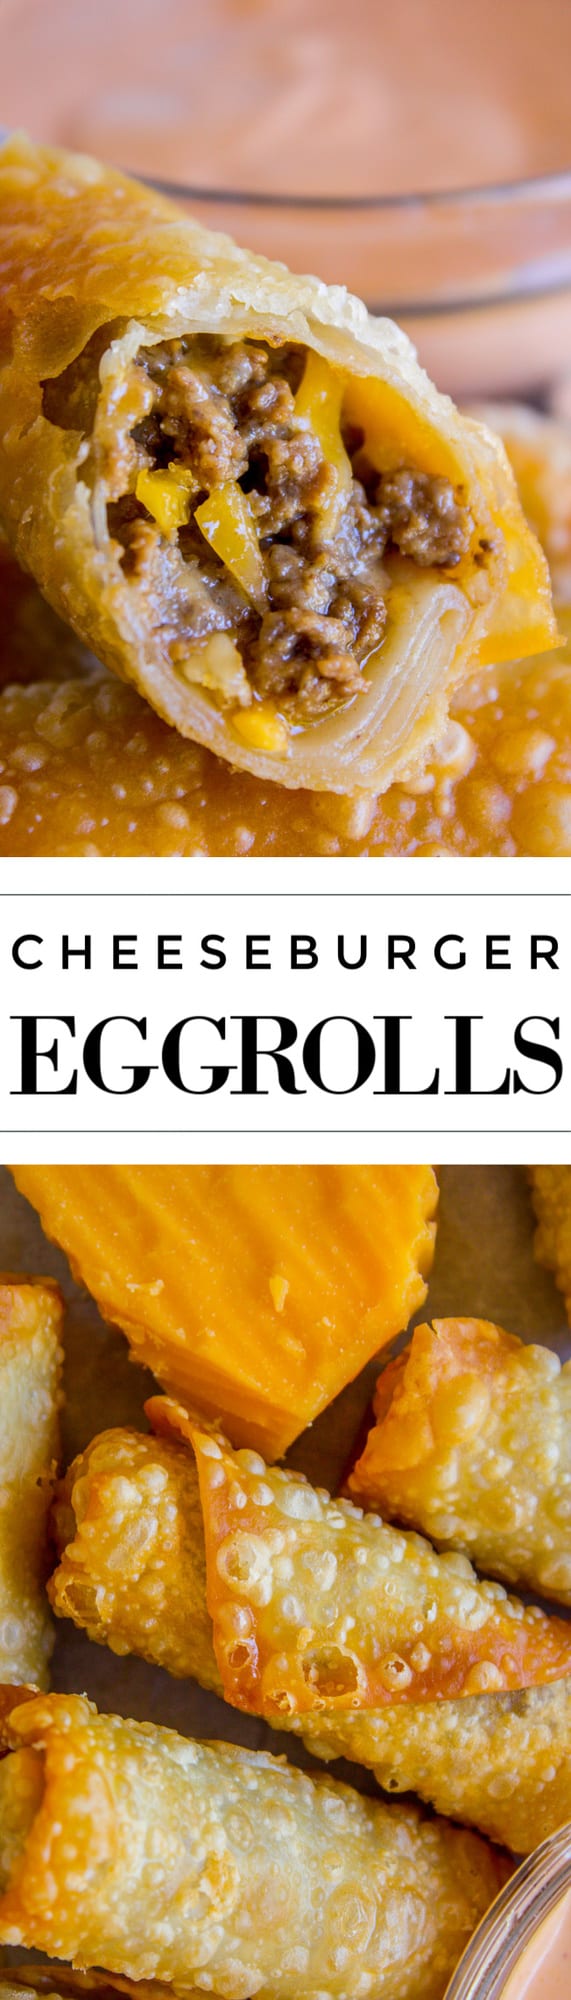 Cheeseburger Egg Rolls Recipe - The Food Charlatan